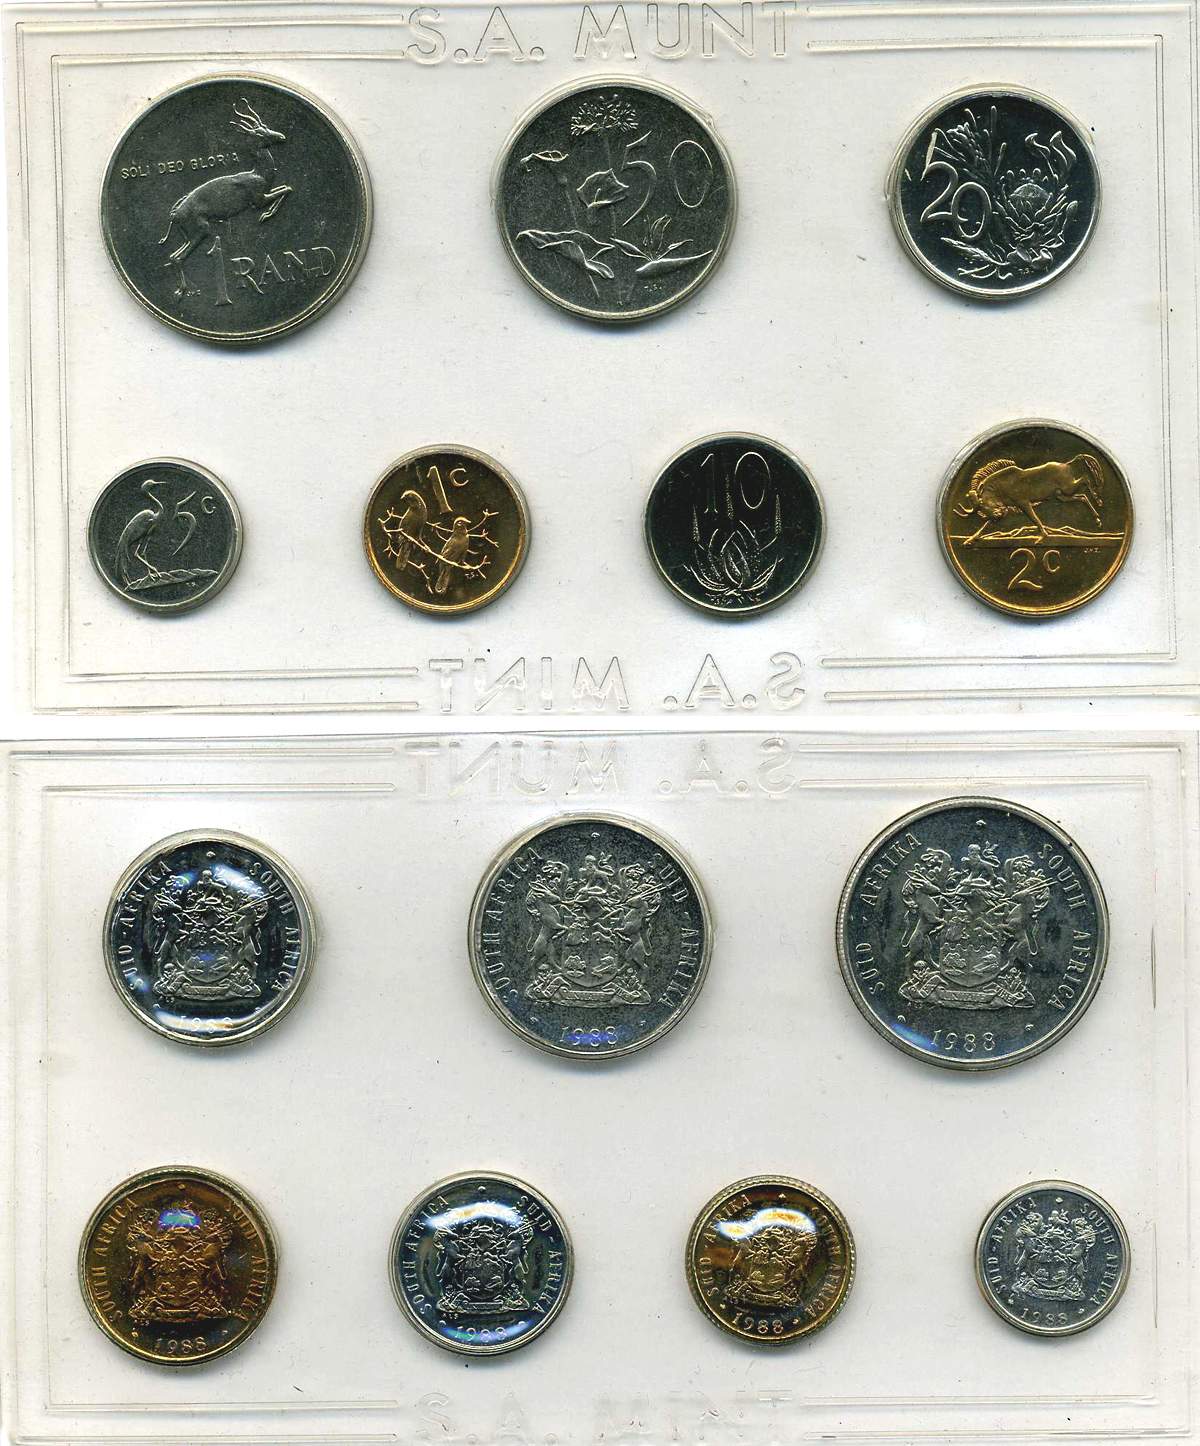 ЮАР запайка 2010 монеты. Монеты Африки запайка. ЮАР набор монеты 1961 года. Монеты Африки с флагом запайка.